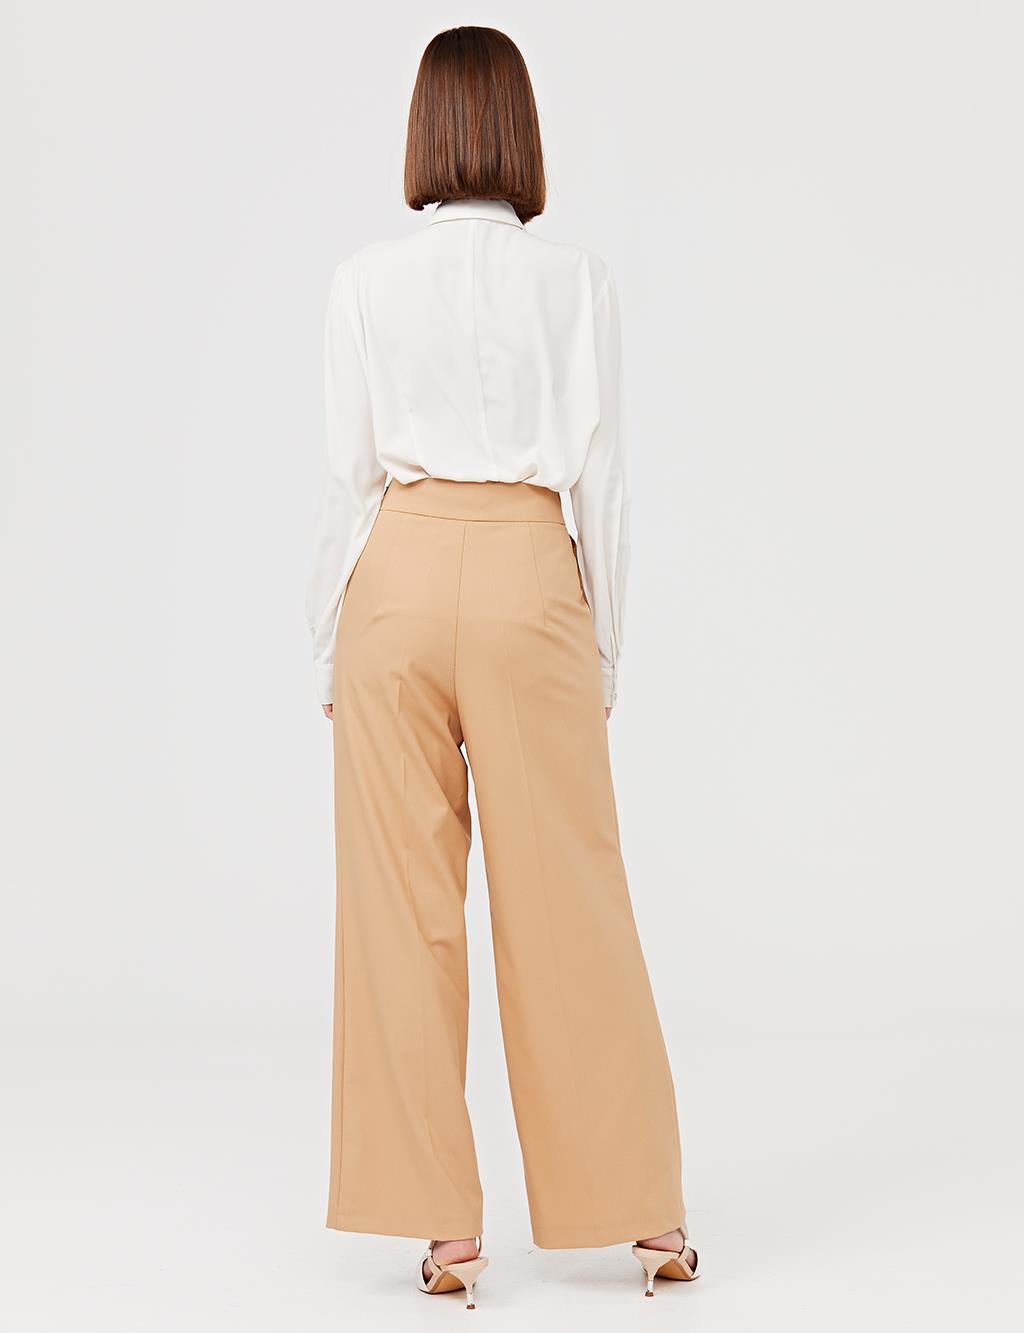 Basic Pants With Pocket SZ-19500 Camel